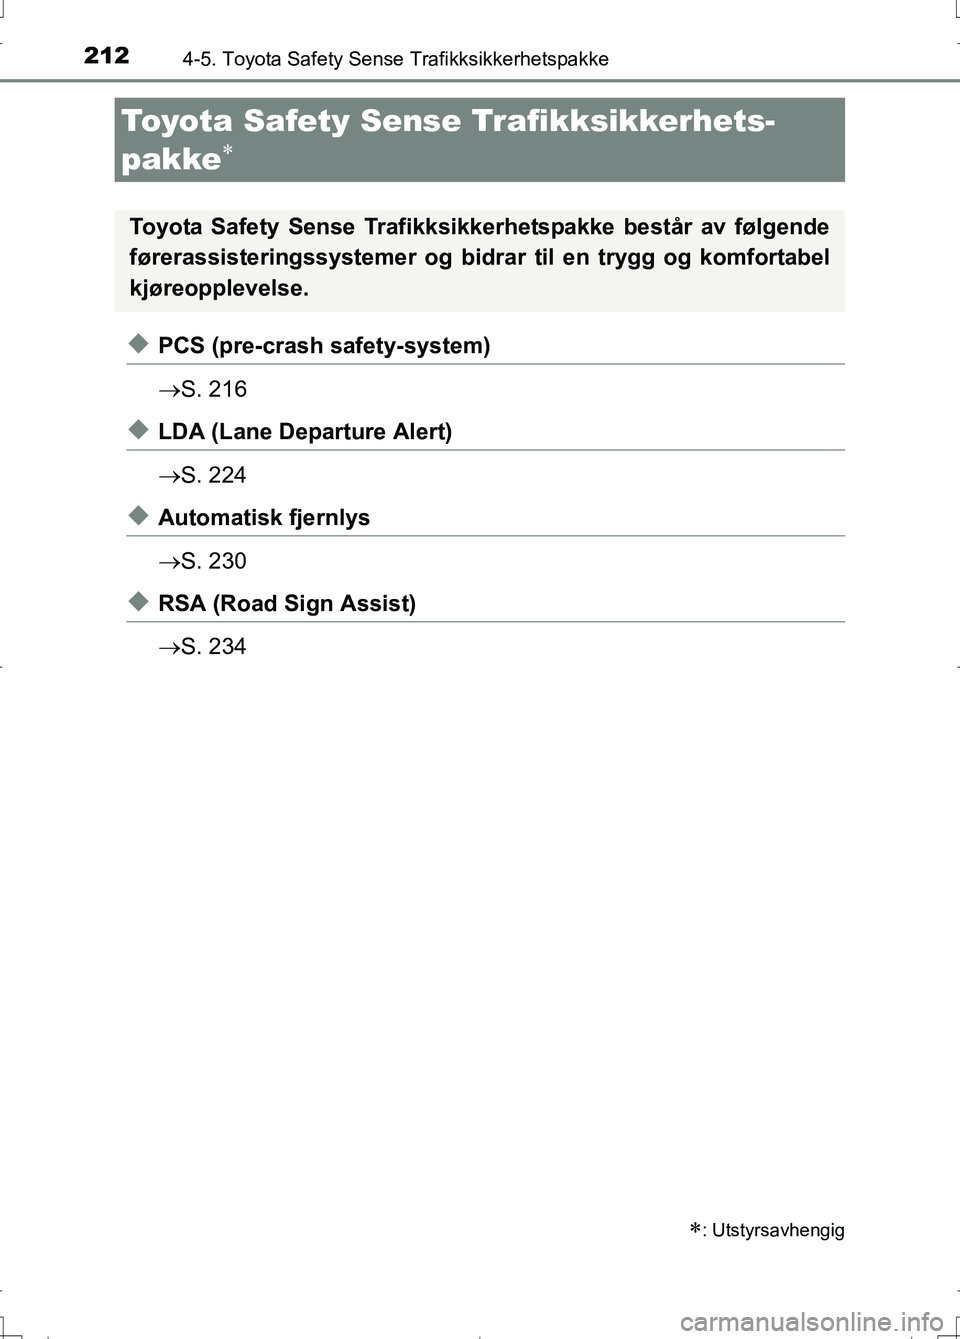 TOYOTA AURIS 2016  Instruksjoner for bruk (in Norwegian) 212
OM12J31NO
4-5. Toyota Safety Sense Trafikksikkerhetspakke
uPCS (pre-crash safety-system)
S. 216
uLDA (Lane Departure Alert)
S. 224
uAutomatisk fjernlys
S. 230
uRSA (Road Sign Assist)
S